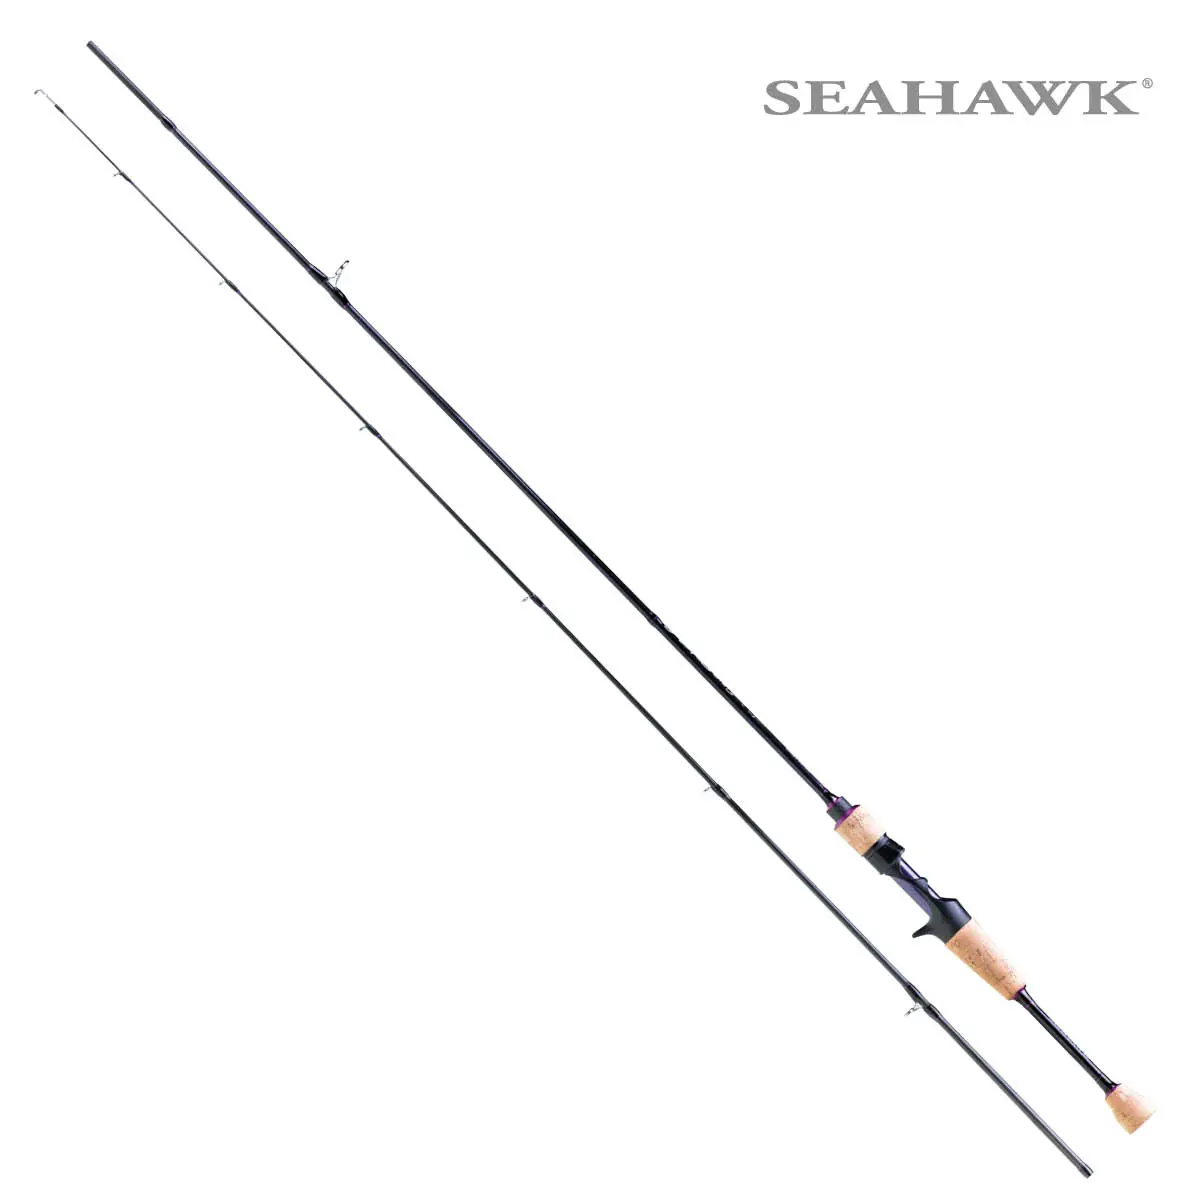 https://seahawkfishing.com/wp-content/uploads/2021/03/Seahawk-Flexis-Lite-SE-FLSE-Purple-C.jpg.webp